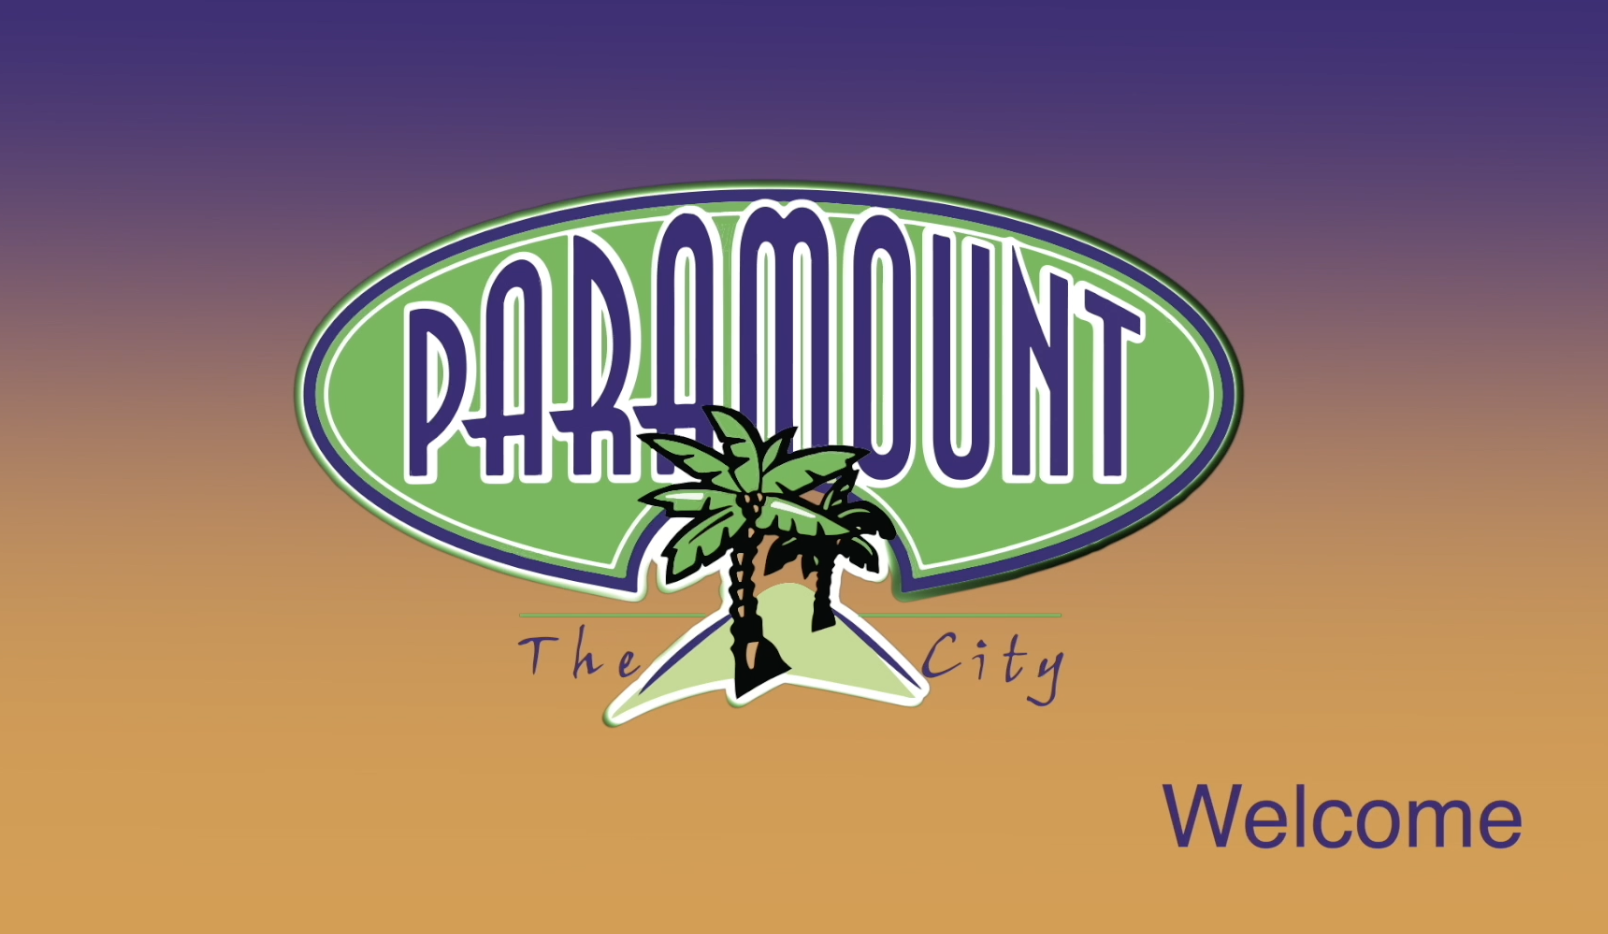 Paramount, CA | Home